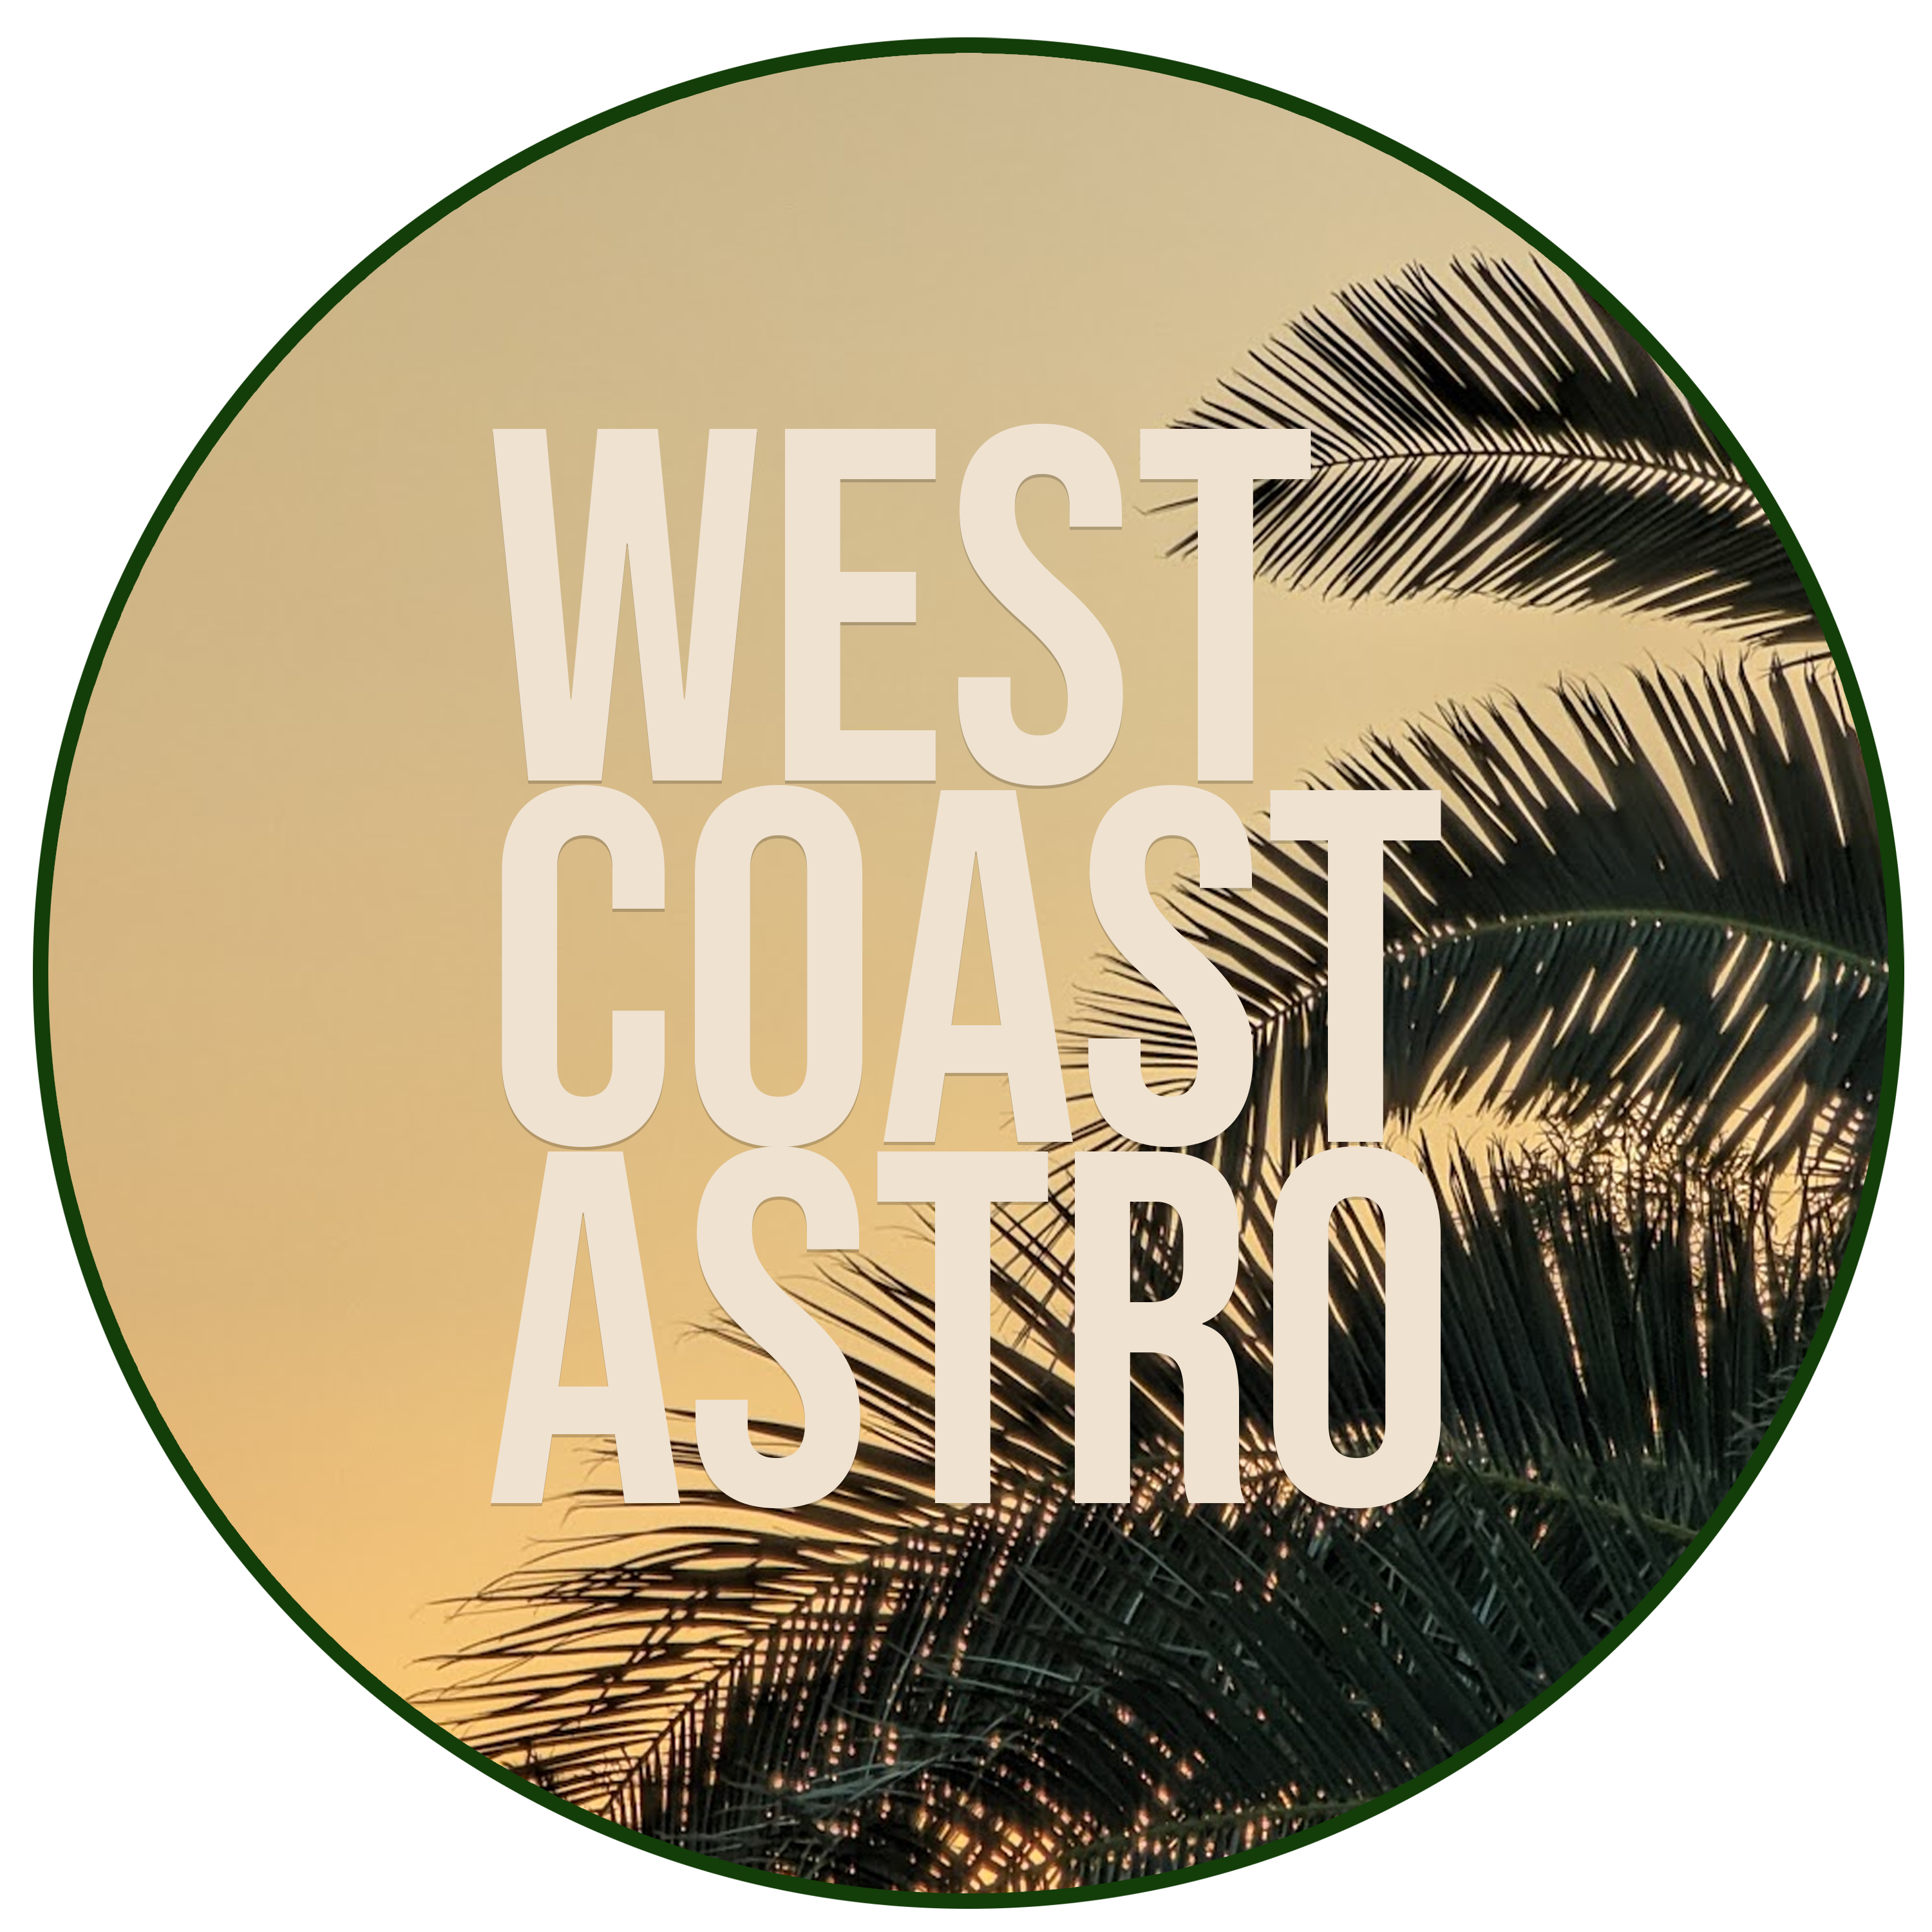 West Coast Astro Logo